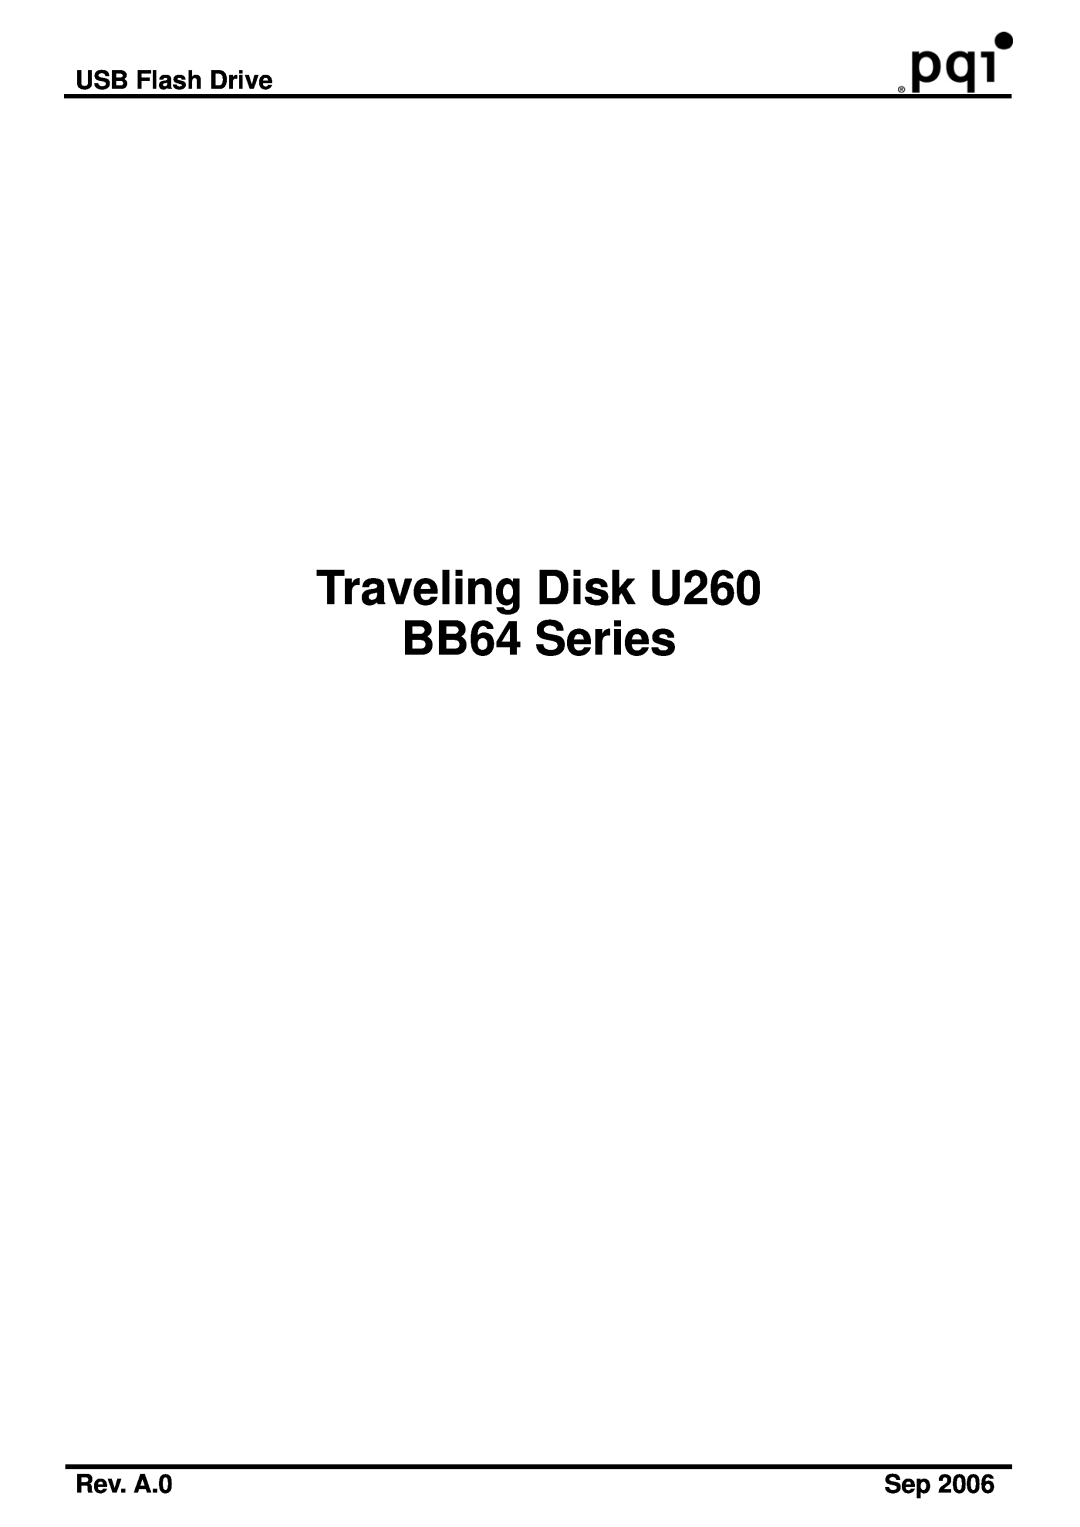 PQI manual USB Flash Drive, Rev. A.0, Traveling Disk U260 BB64 Series 